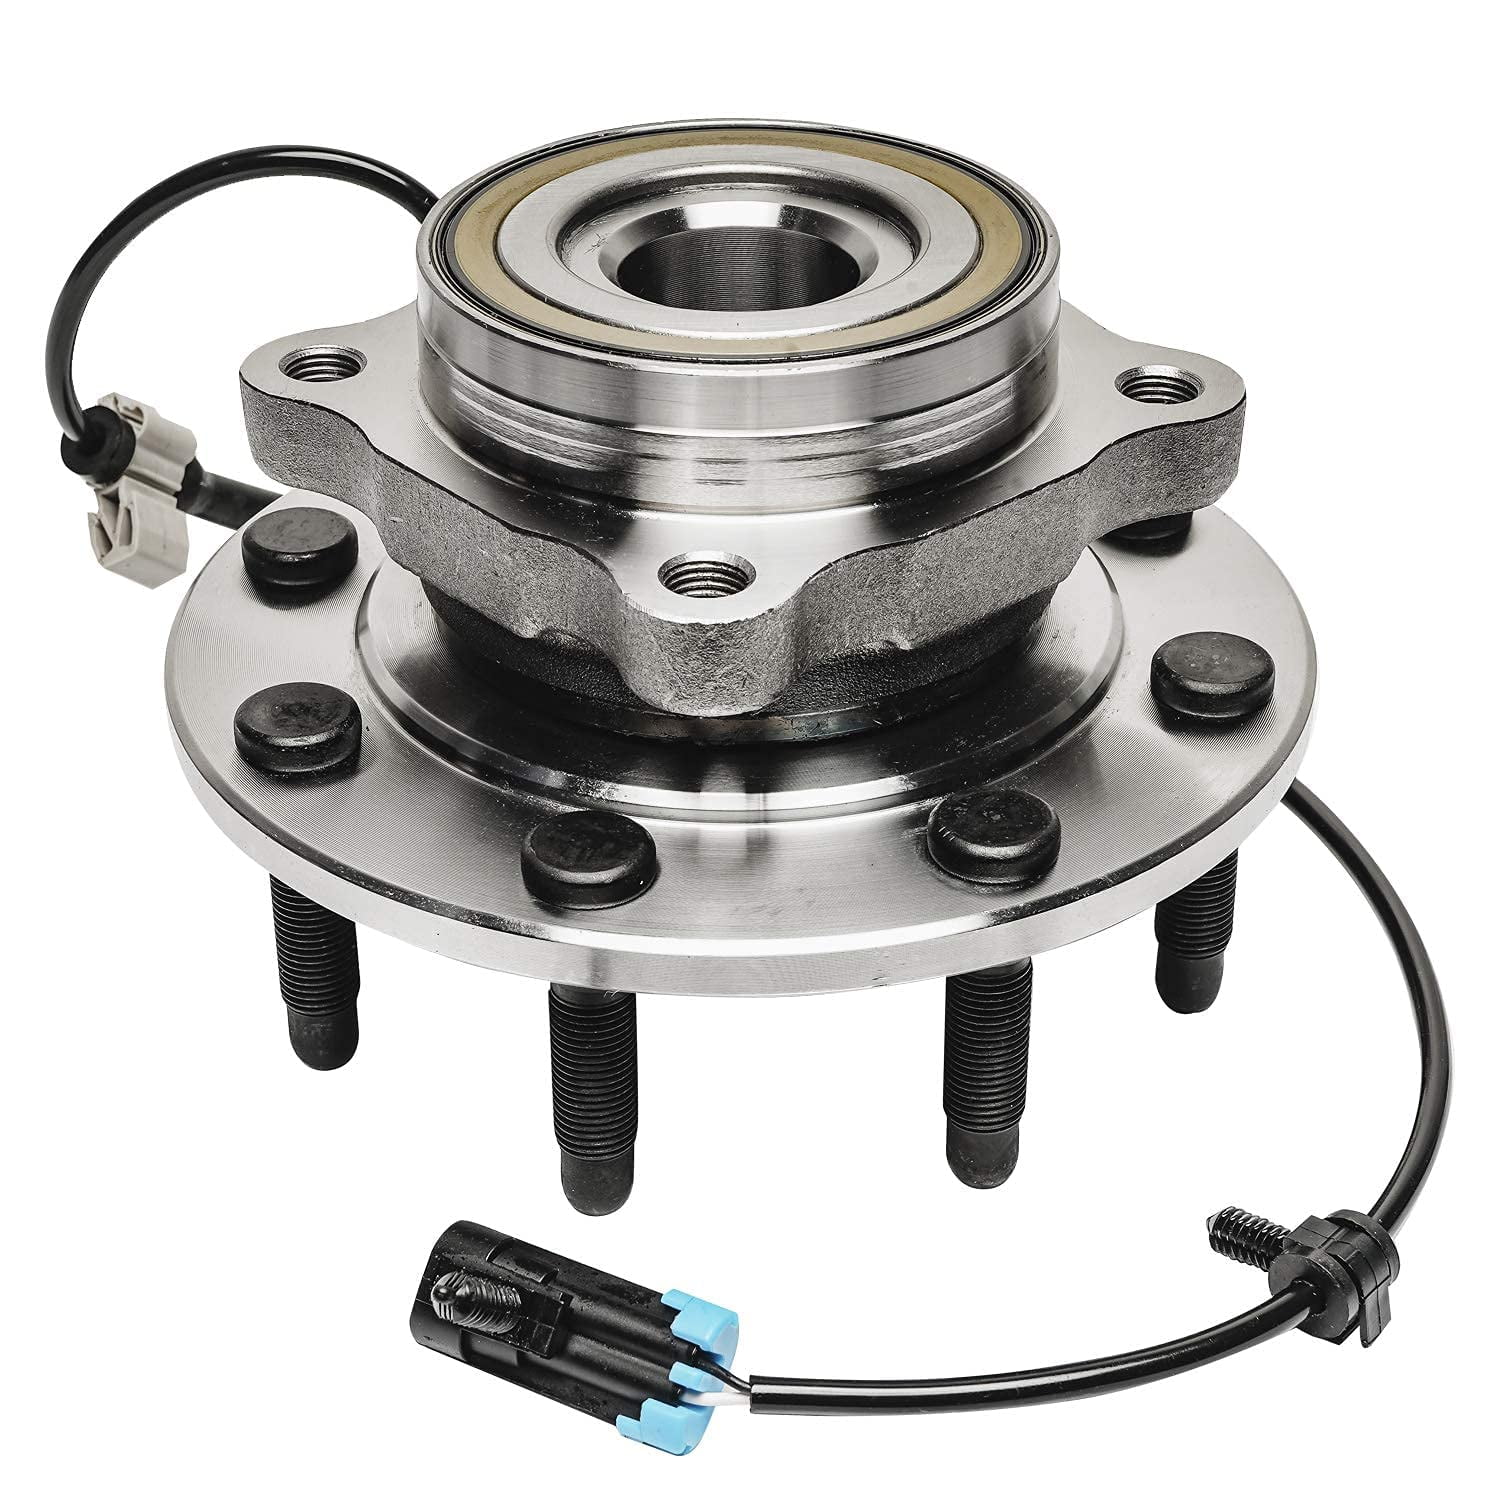 Trailer's wheel for NOVAL type - 4.80/4.00-8 TL 6PR 70M / Ball bearing hub  Ø12x141/ Tyre Deli S-378 / TR600 HP valve